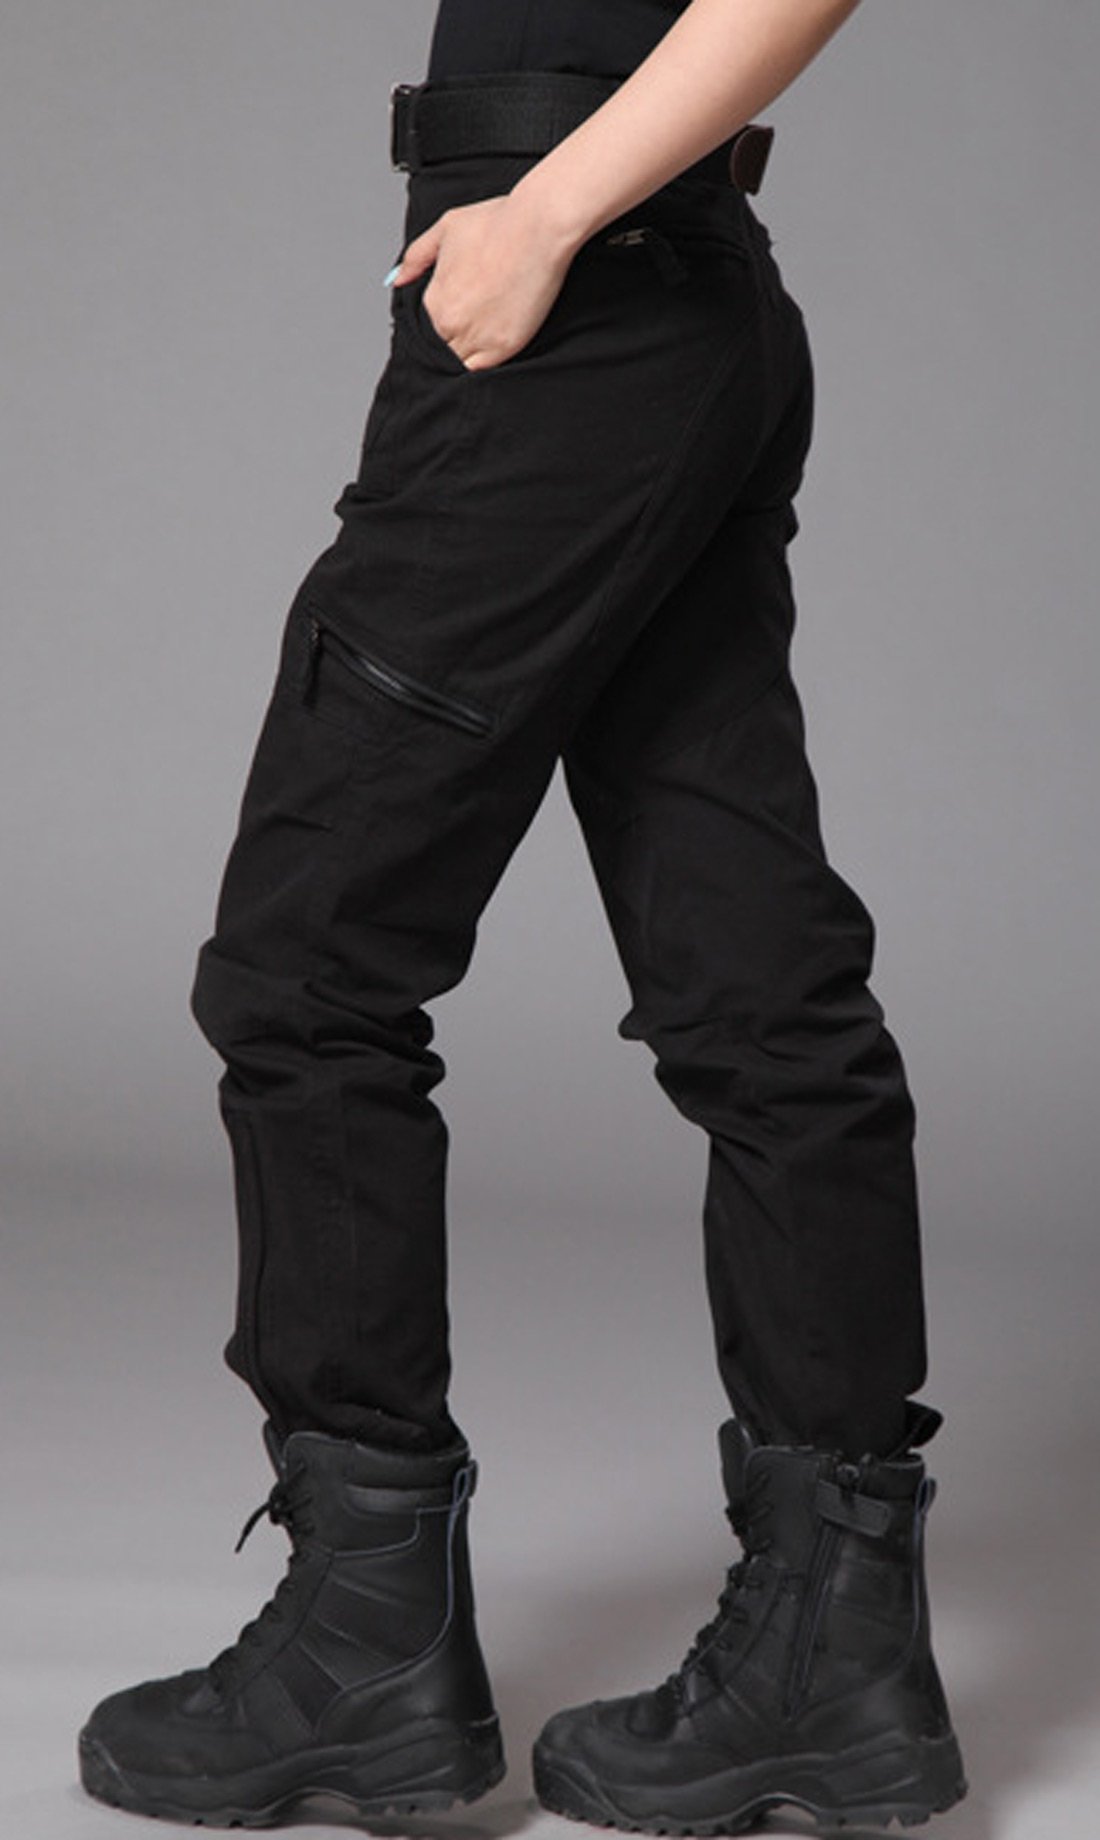 chouyatou Women's Military Straight Fit Stylish Combat Cargo Slacks Pants (Medium, Black)